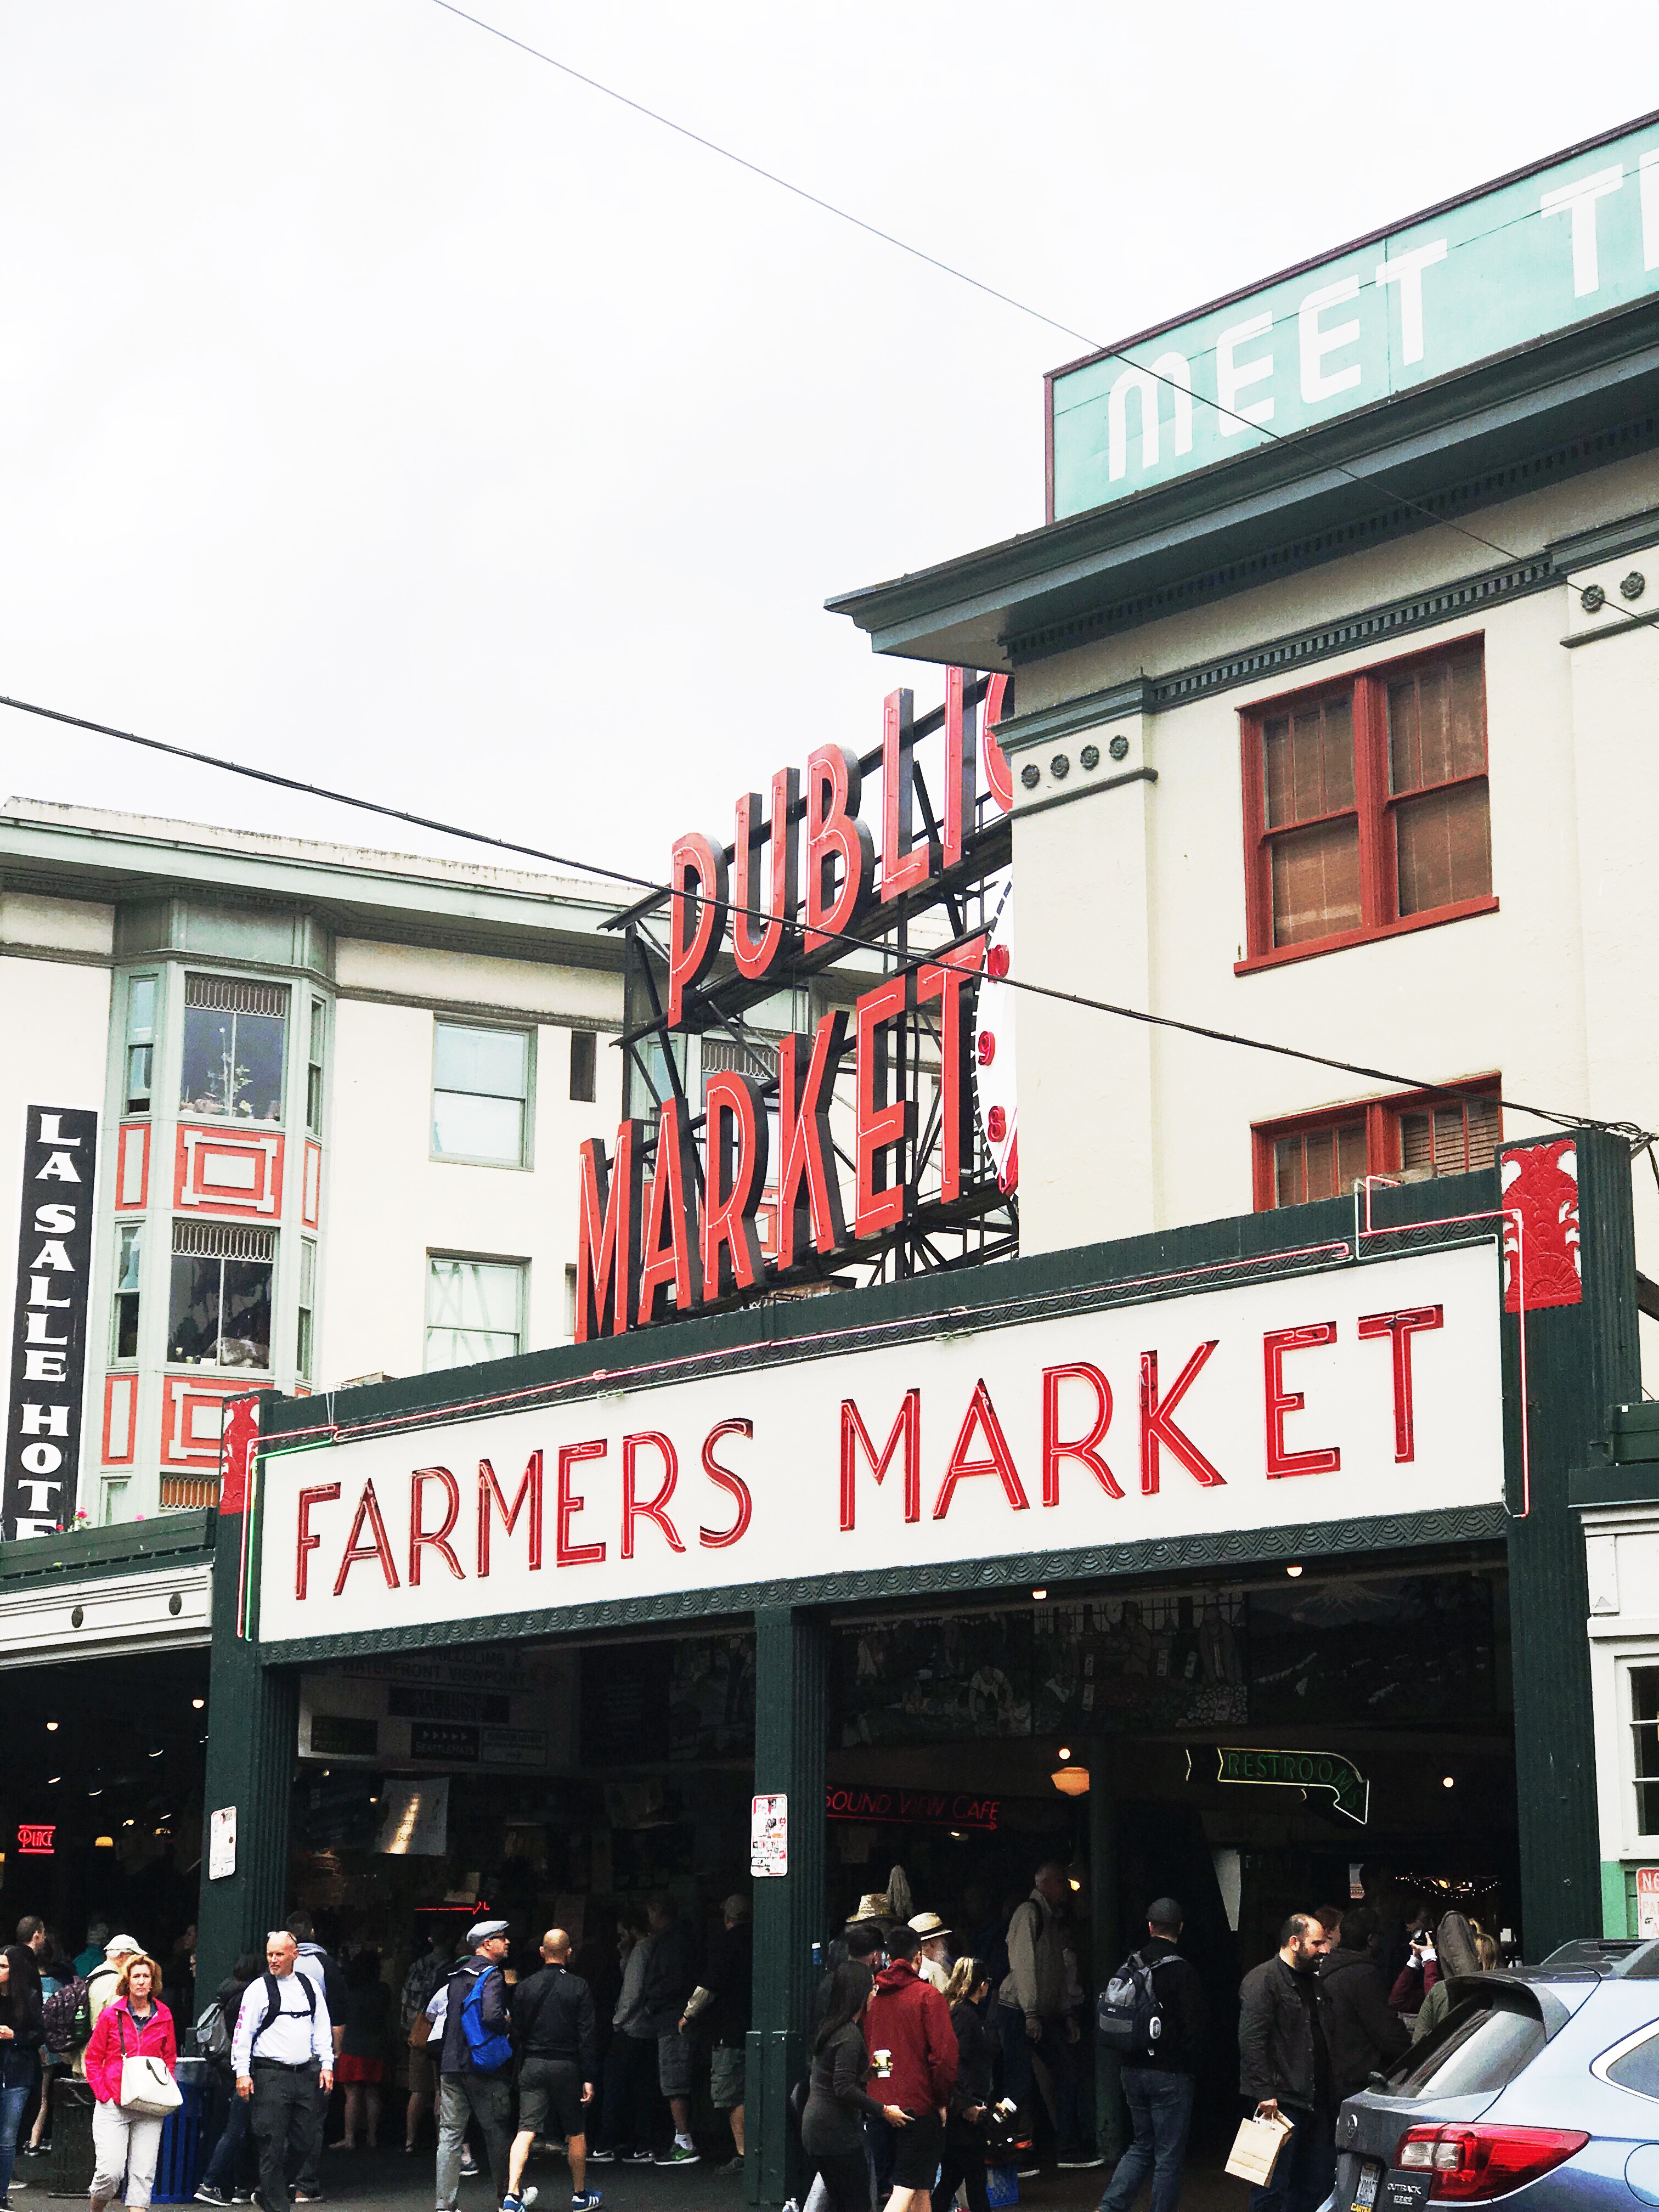 Public Market Place - Pike Place Market in Seattle Washington